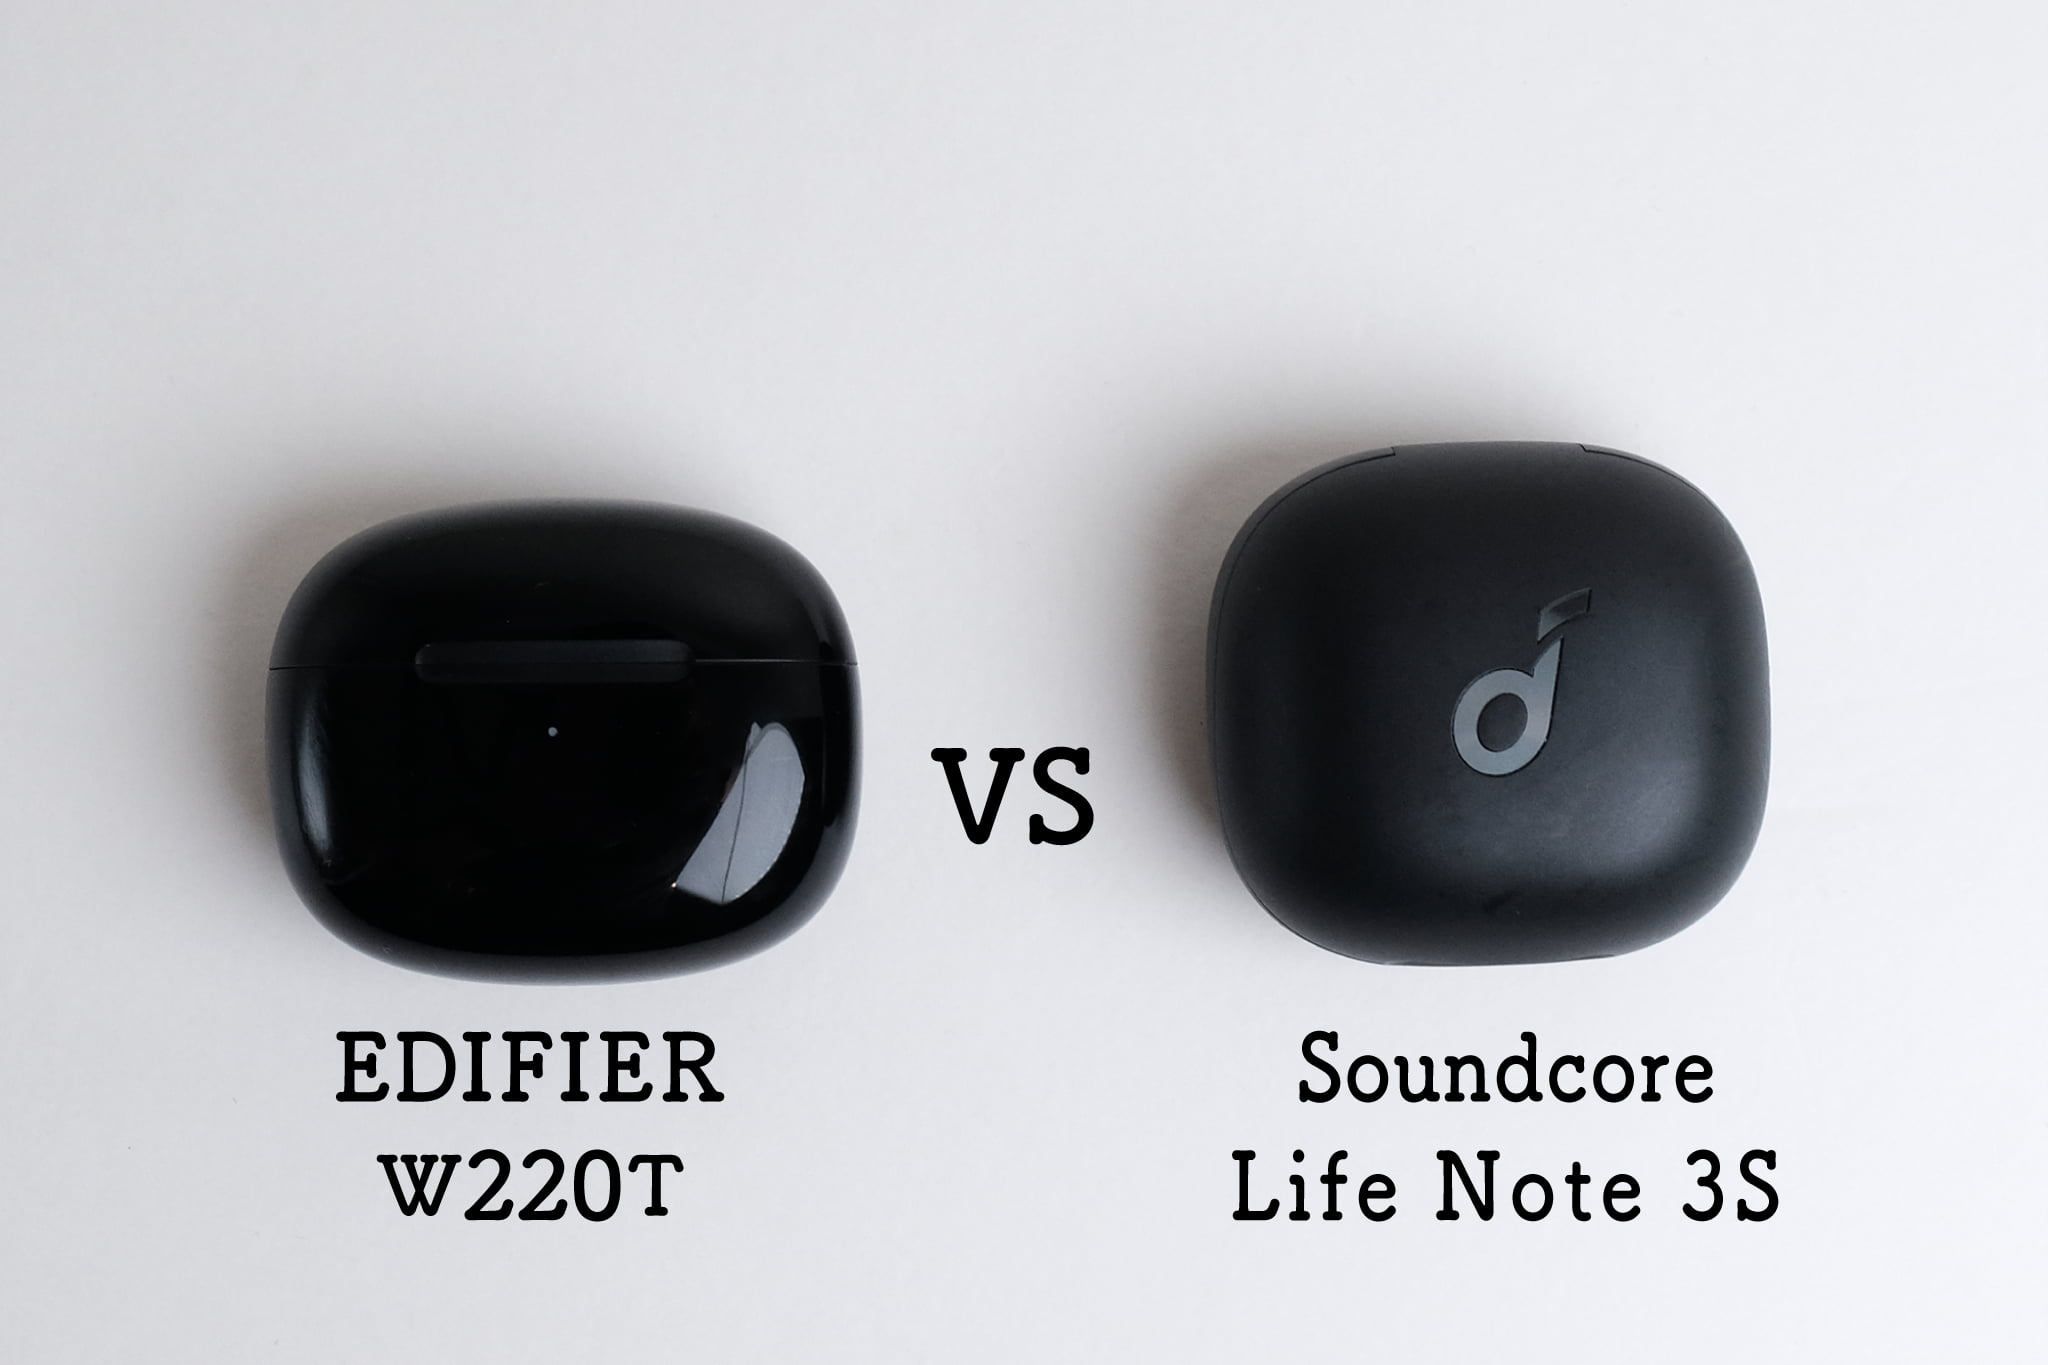 EDIFIER W220Tと Soundcore Life Note 3S を比べてみる